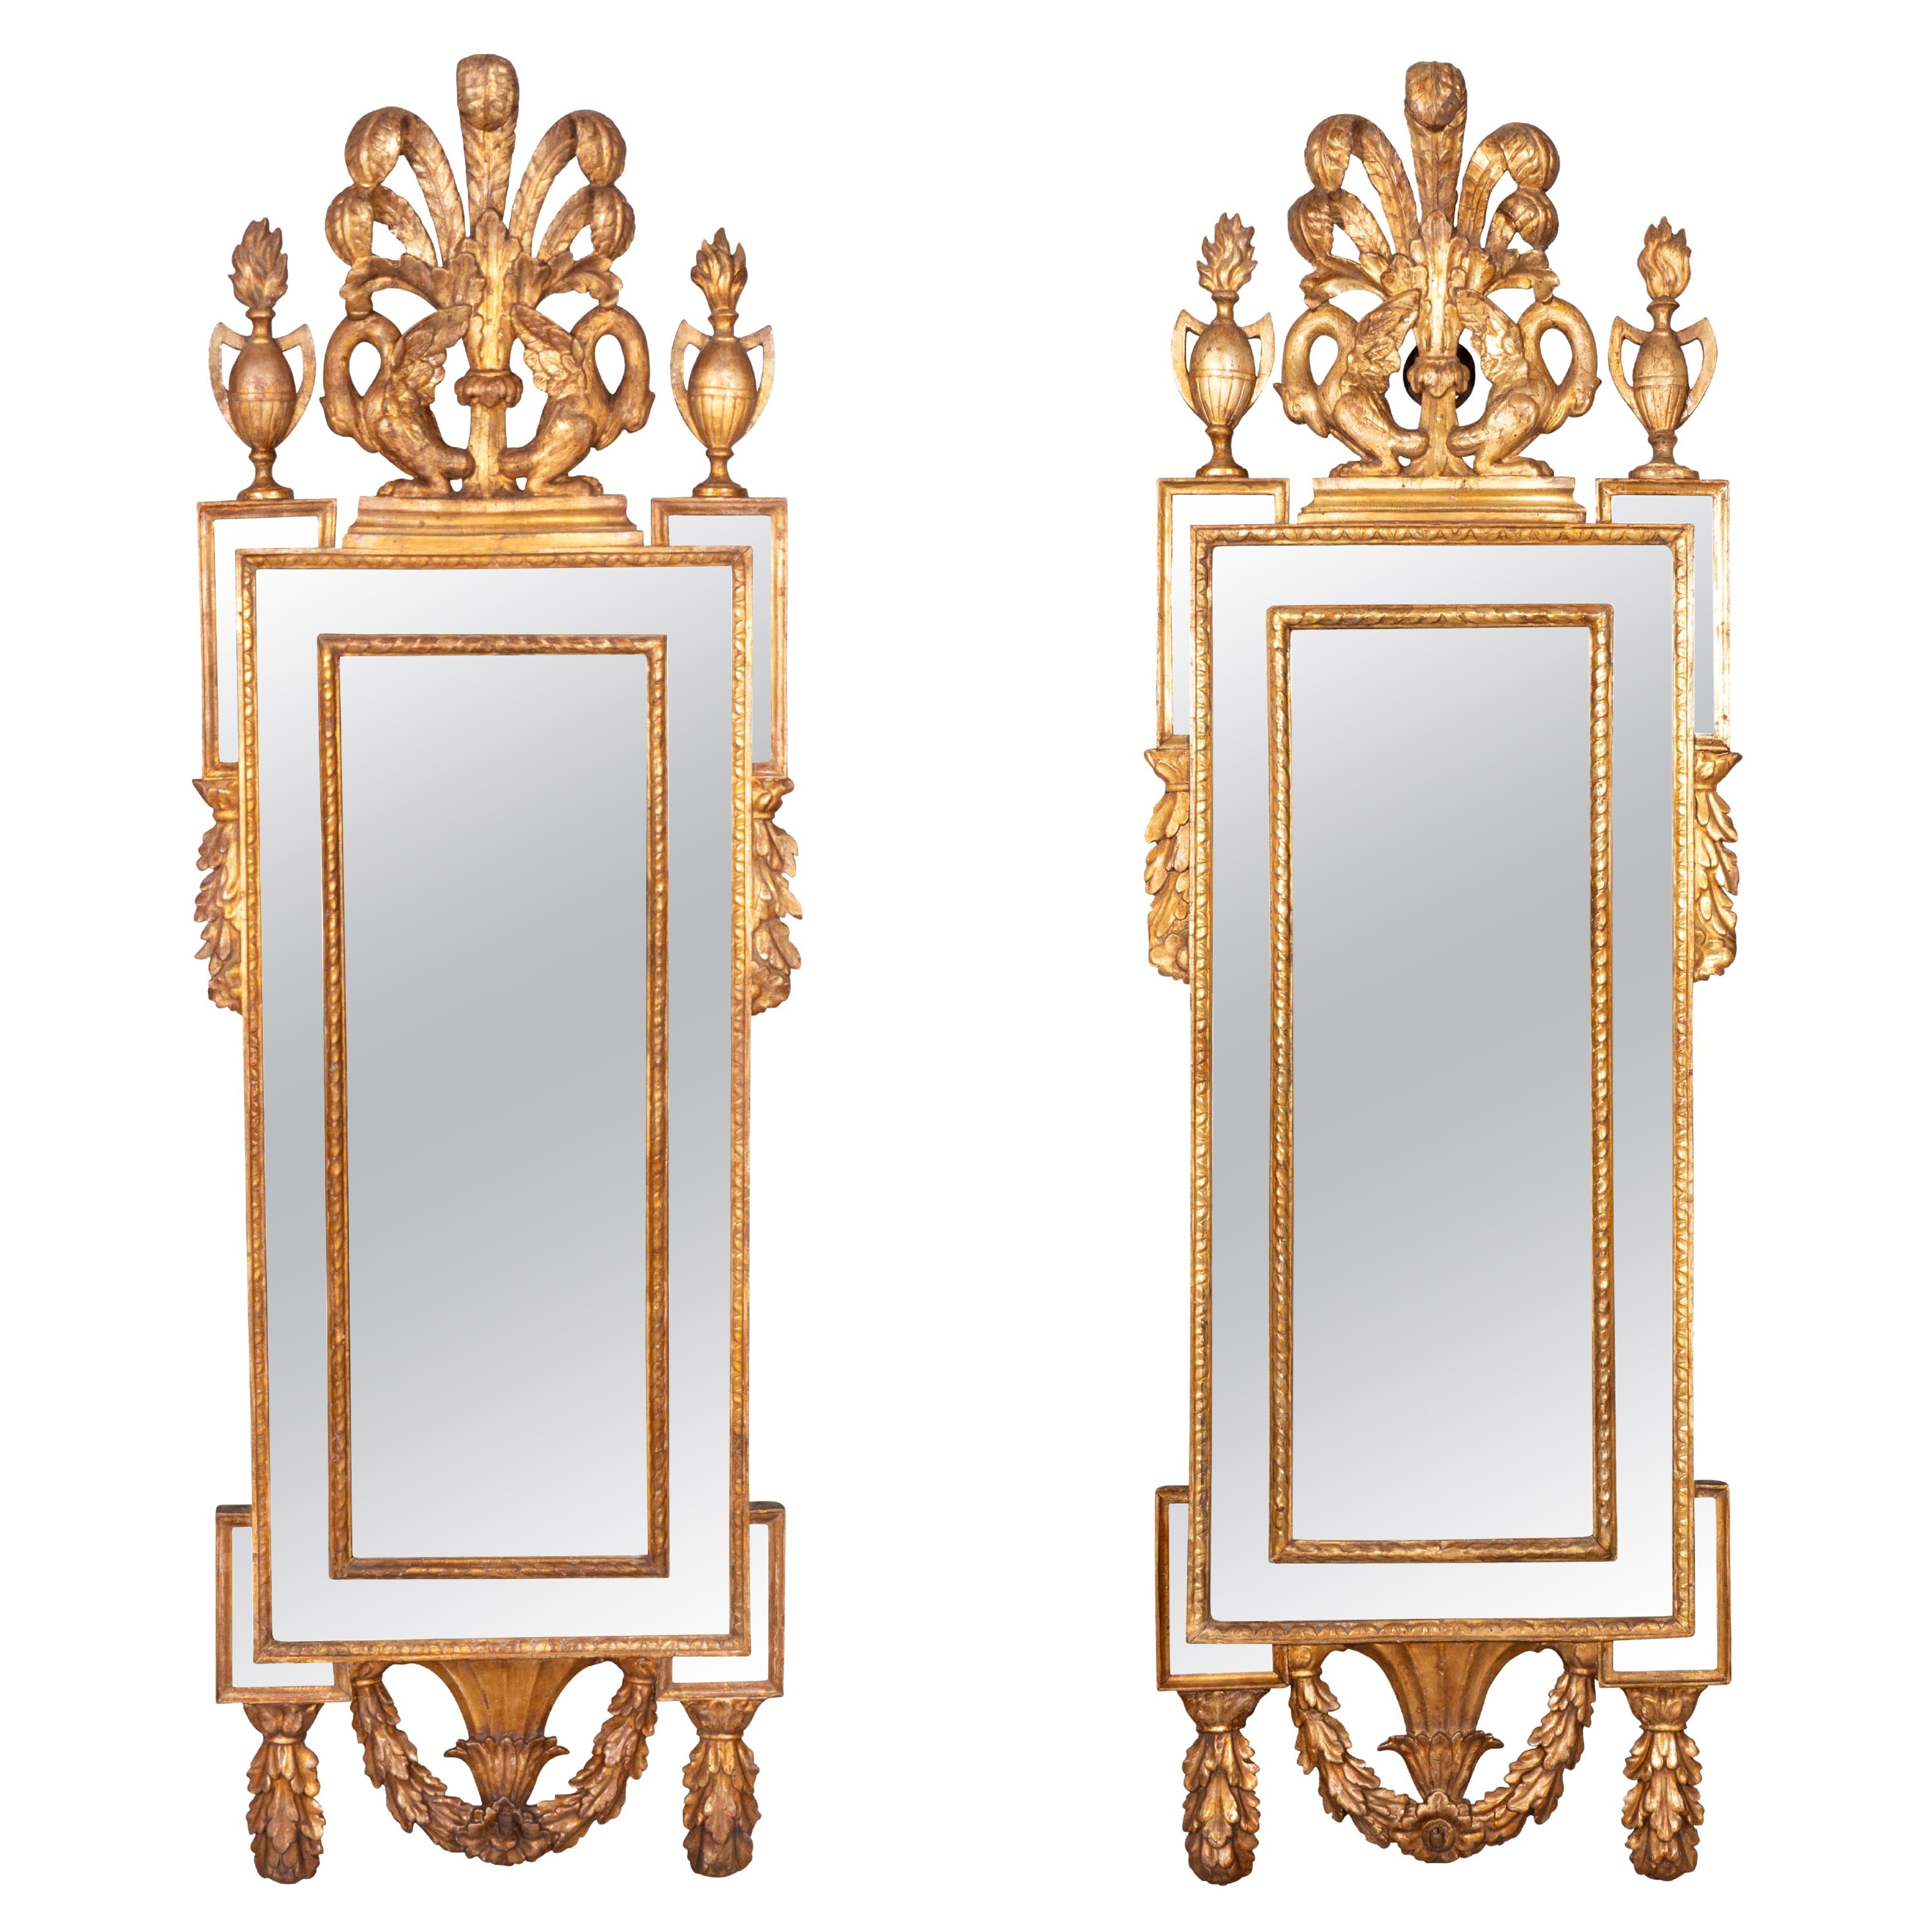 Pair of Italian Neoclassical Giltwood Mirrors